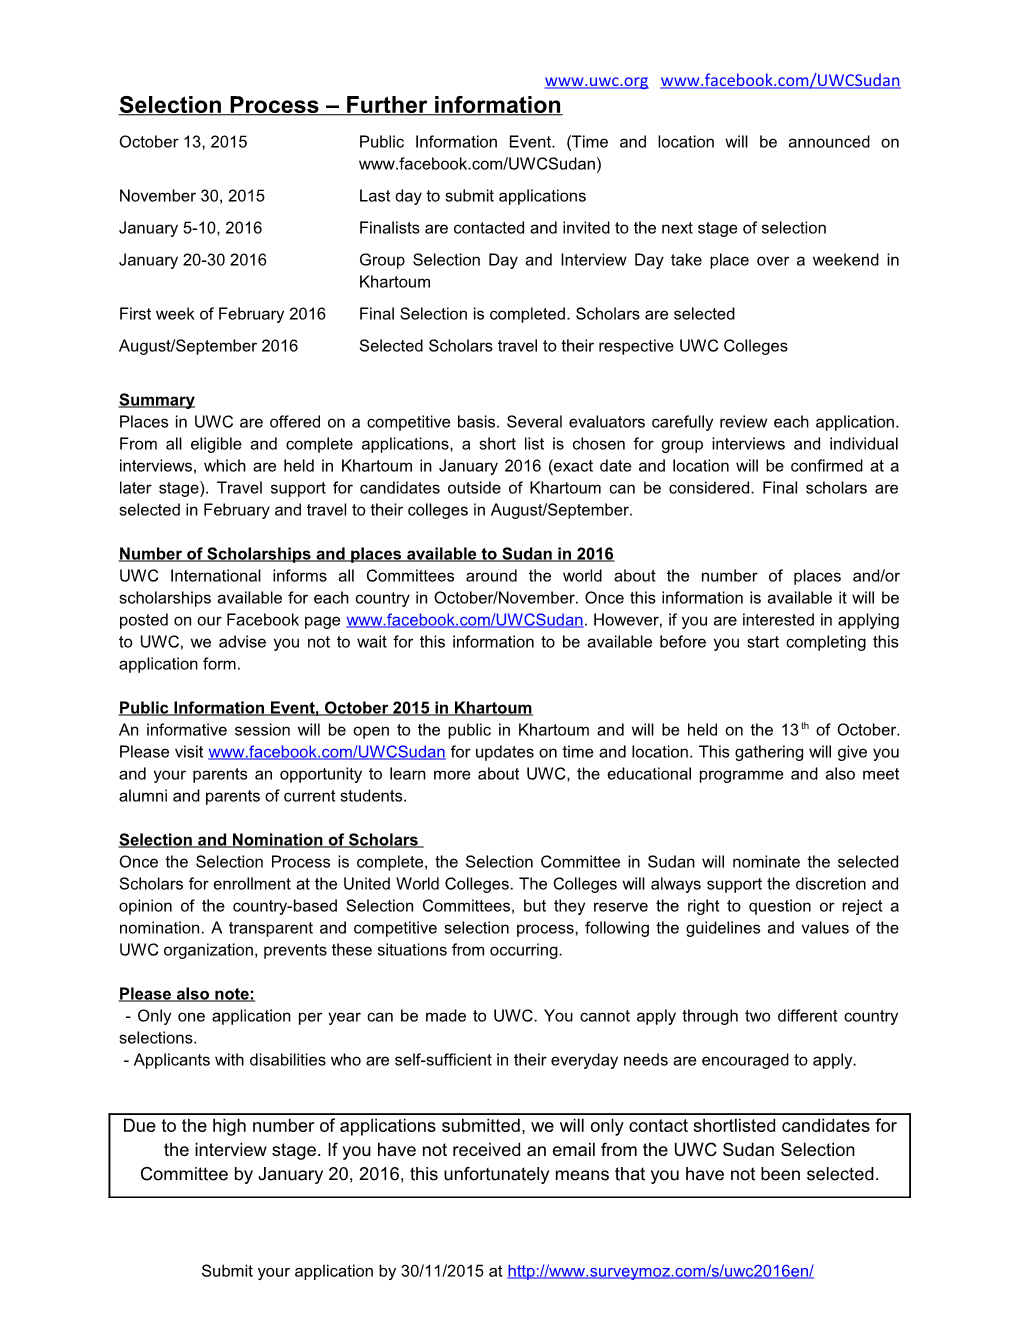 UWC Sudan Application Form (English)